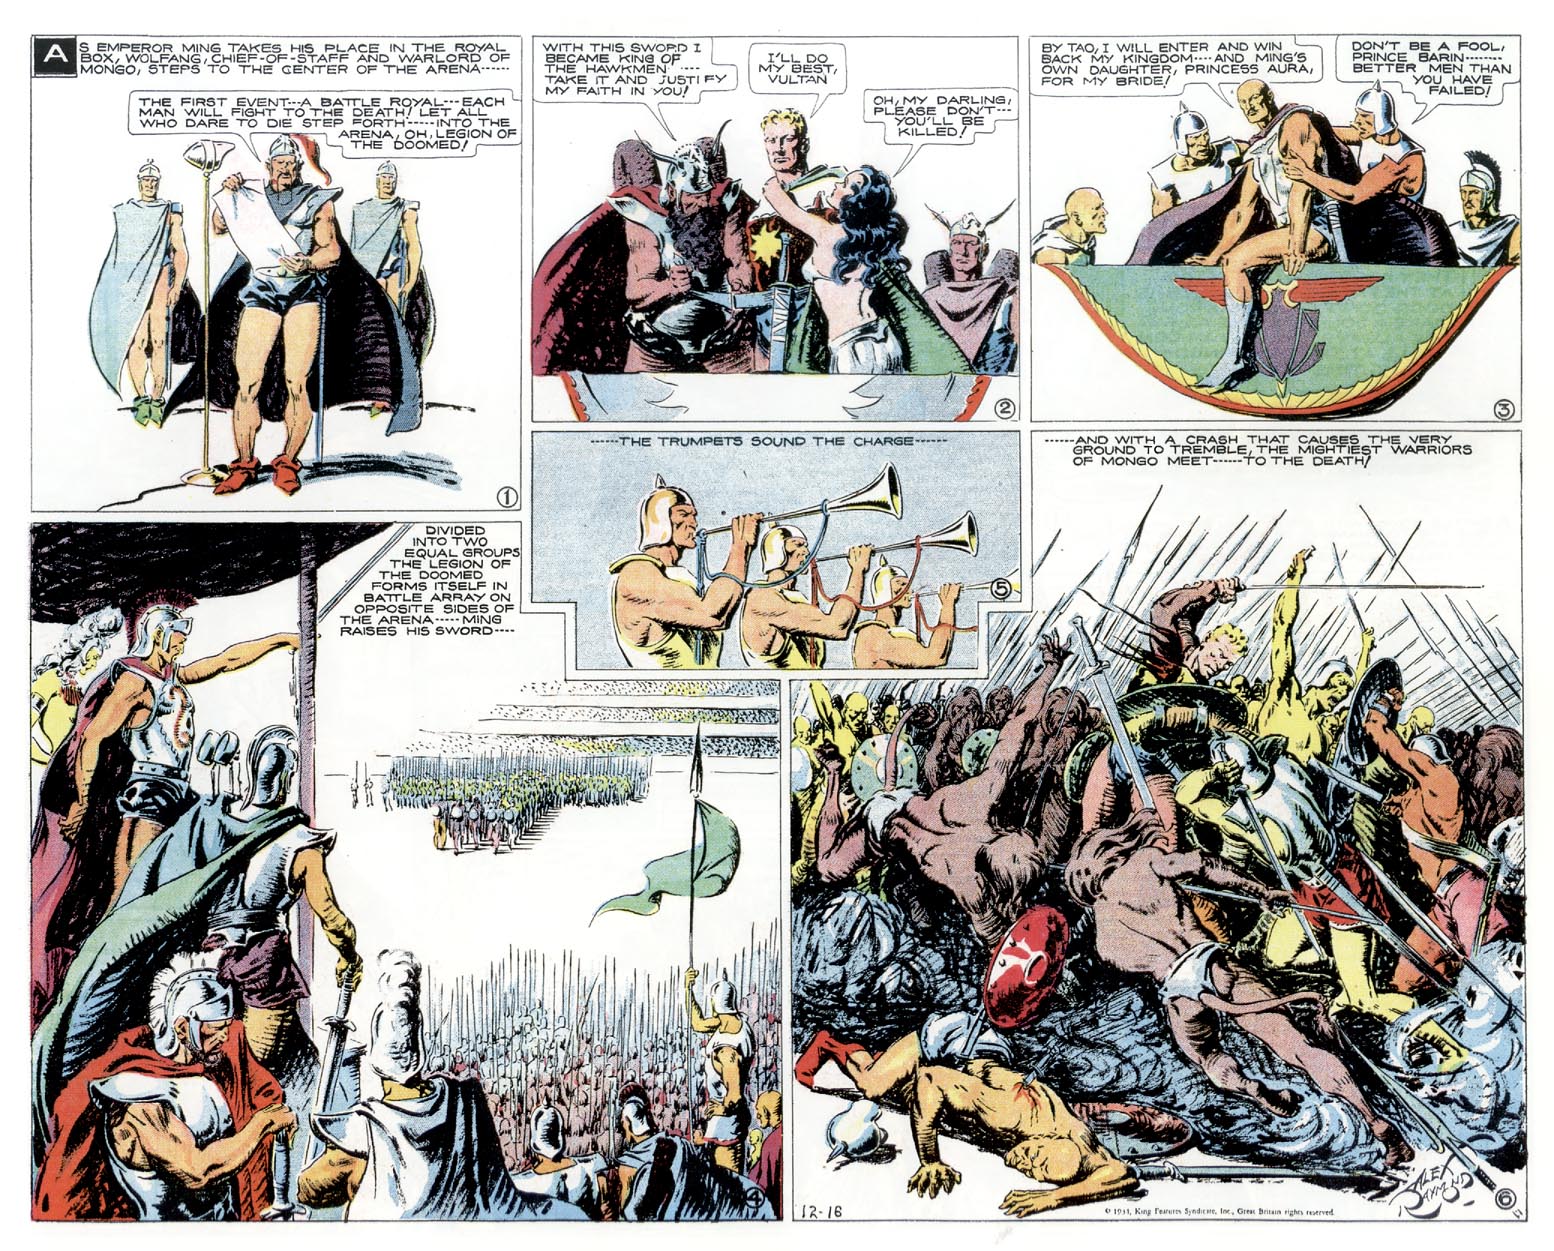 flash, Gordon, Comic, Superhero, Sci fi Wallpaper